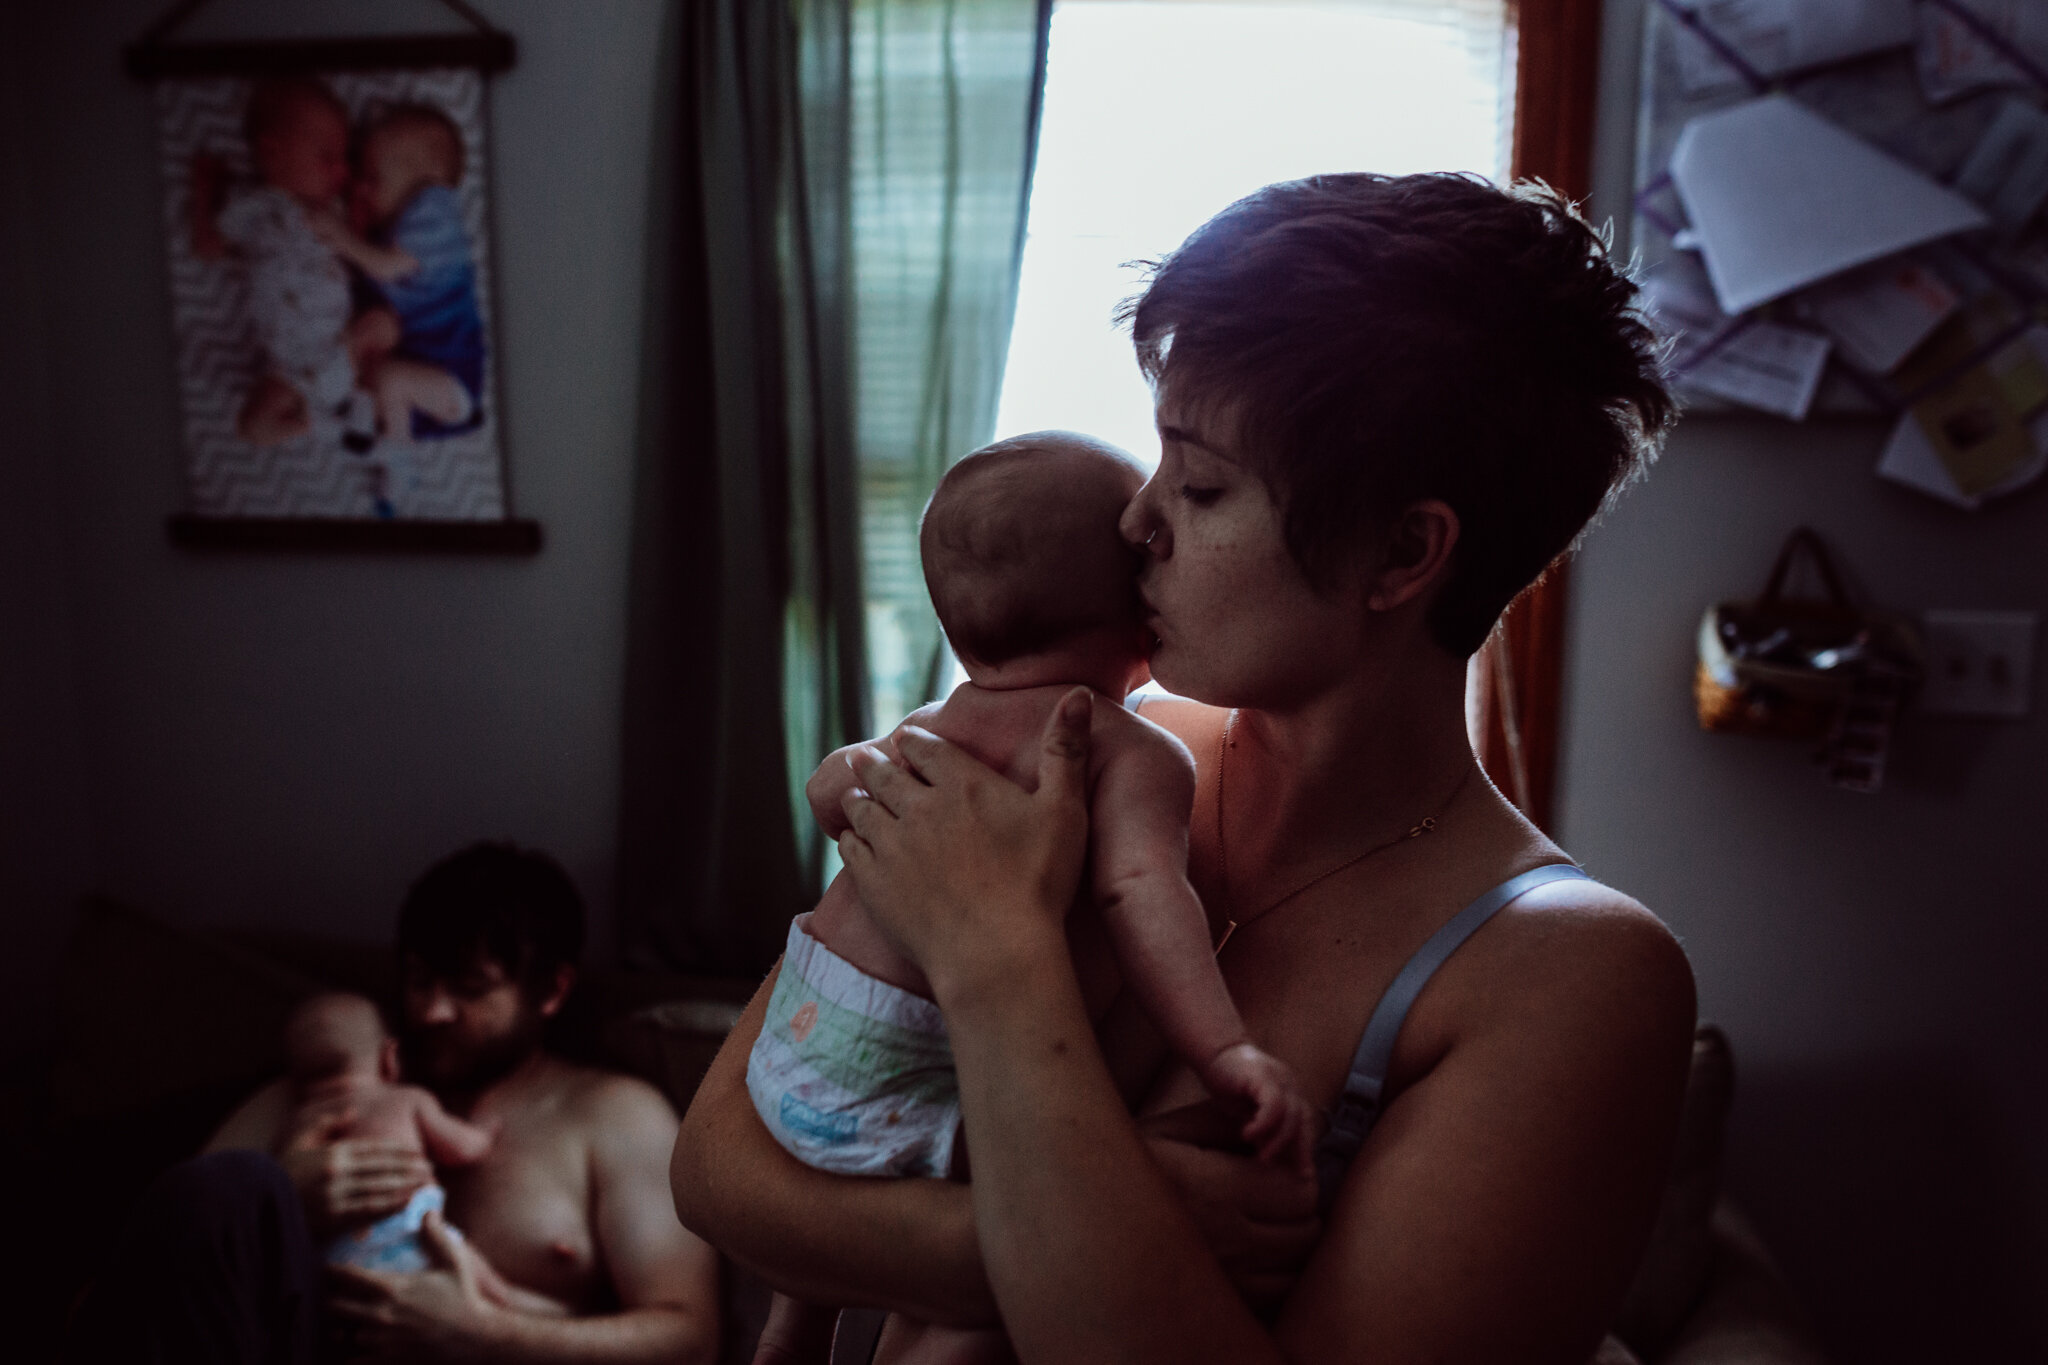 Maggie-Williams-Photography-Postpartum-4748.jpg